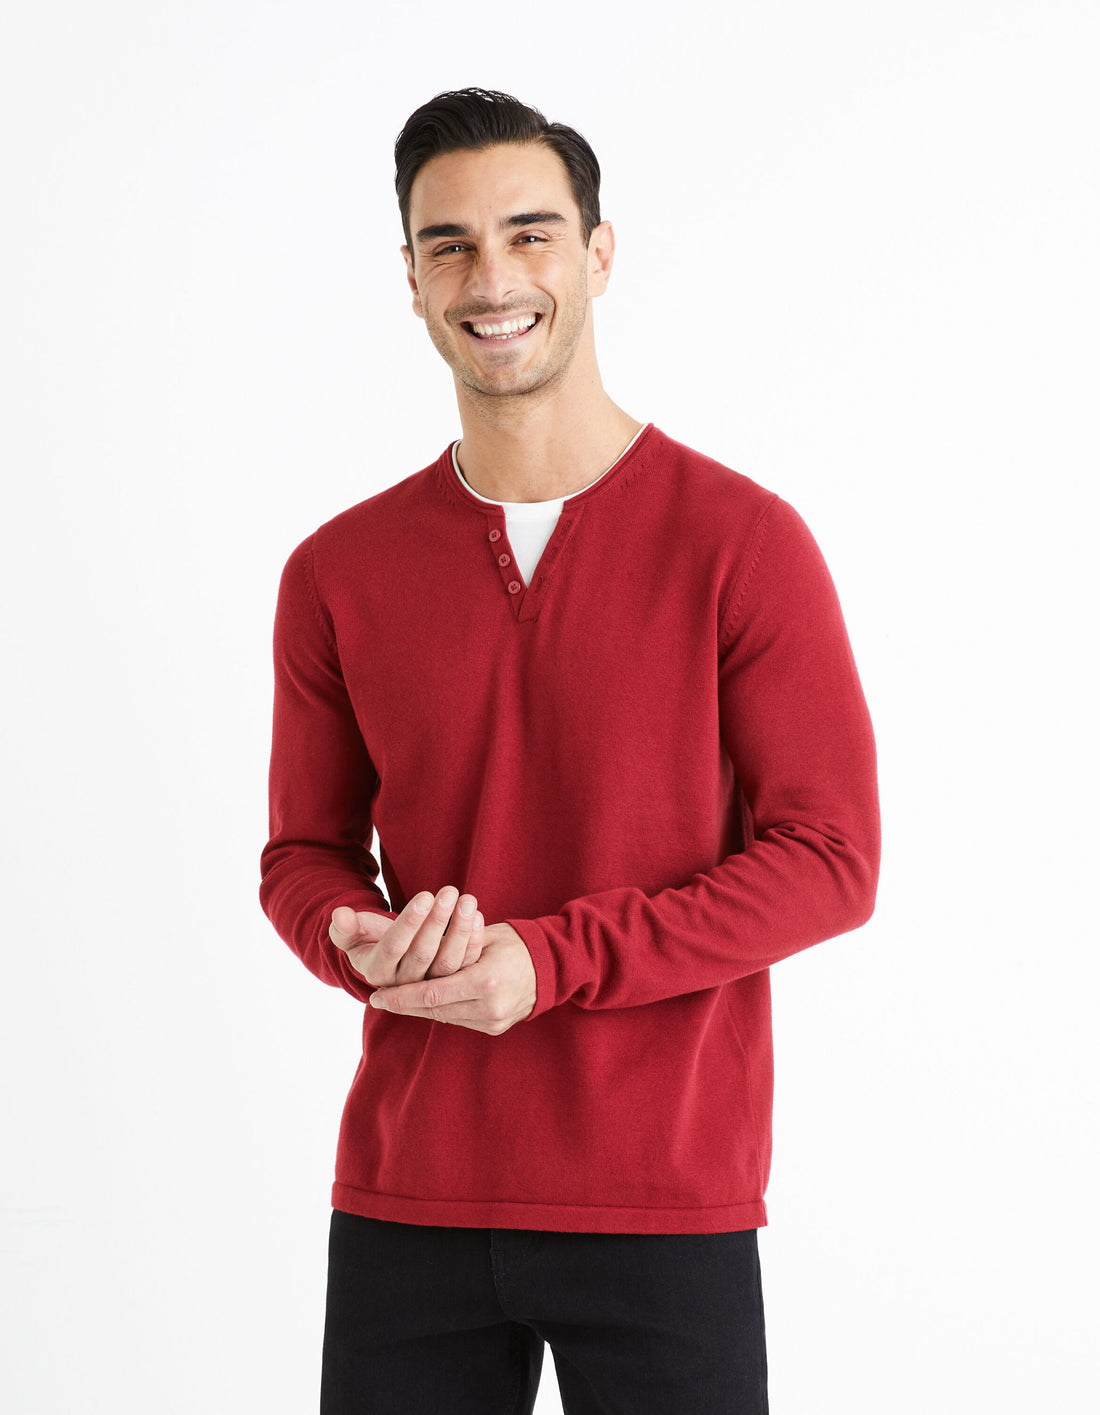 Tunisian Collar Sweater 100% Cotton - Burgundy_FELANO_BURGUNDY_01